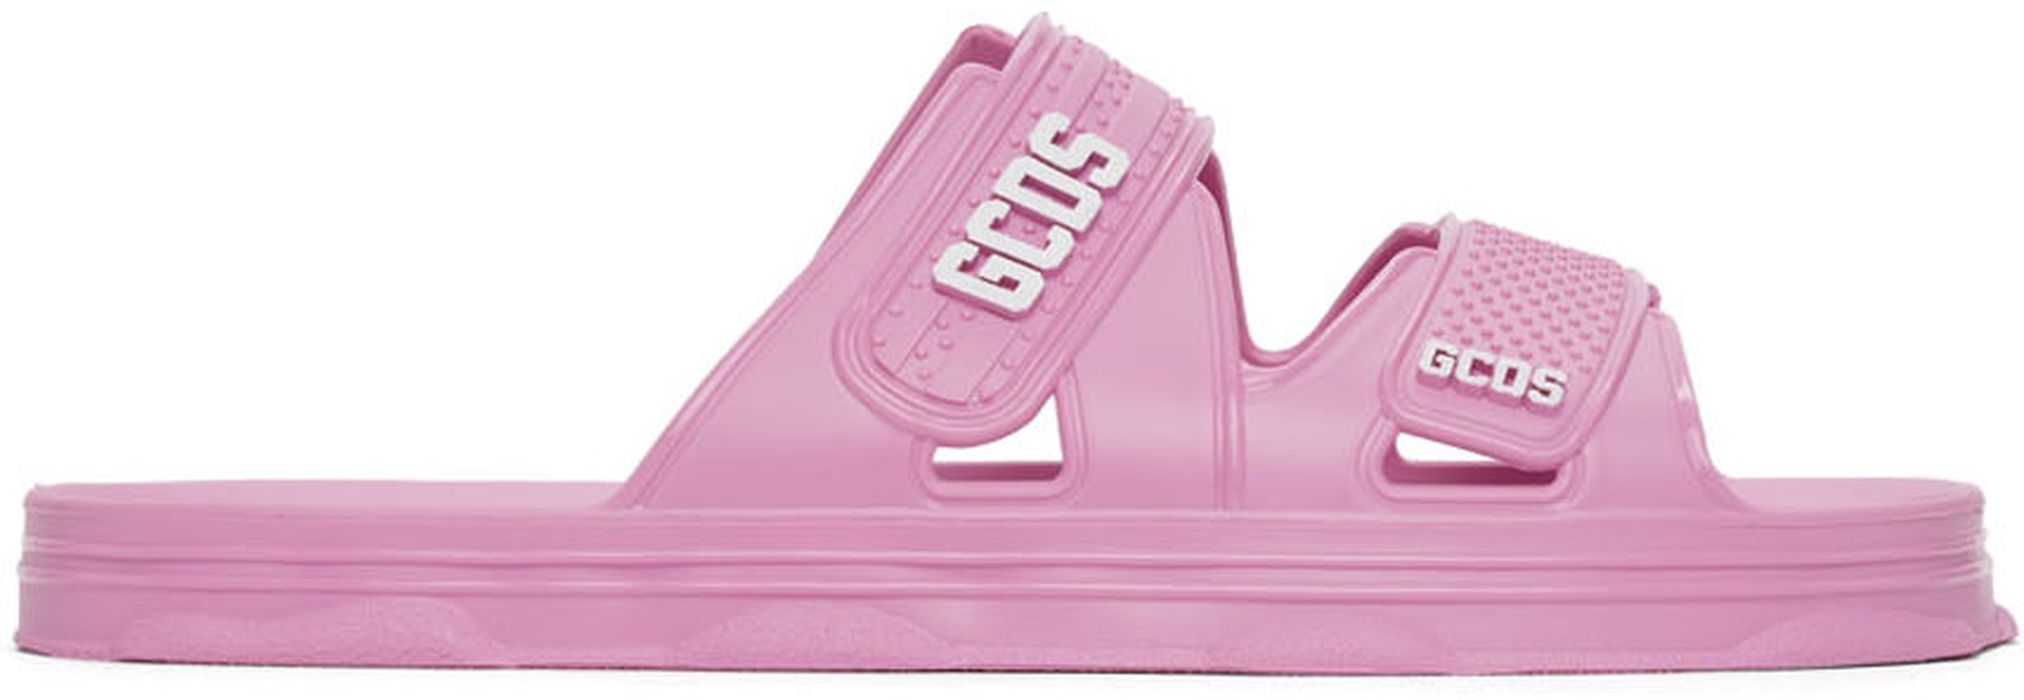 GCDS Pink Rubber Slider Sandals